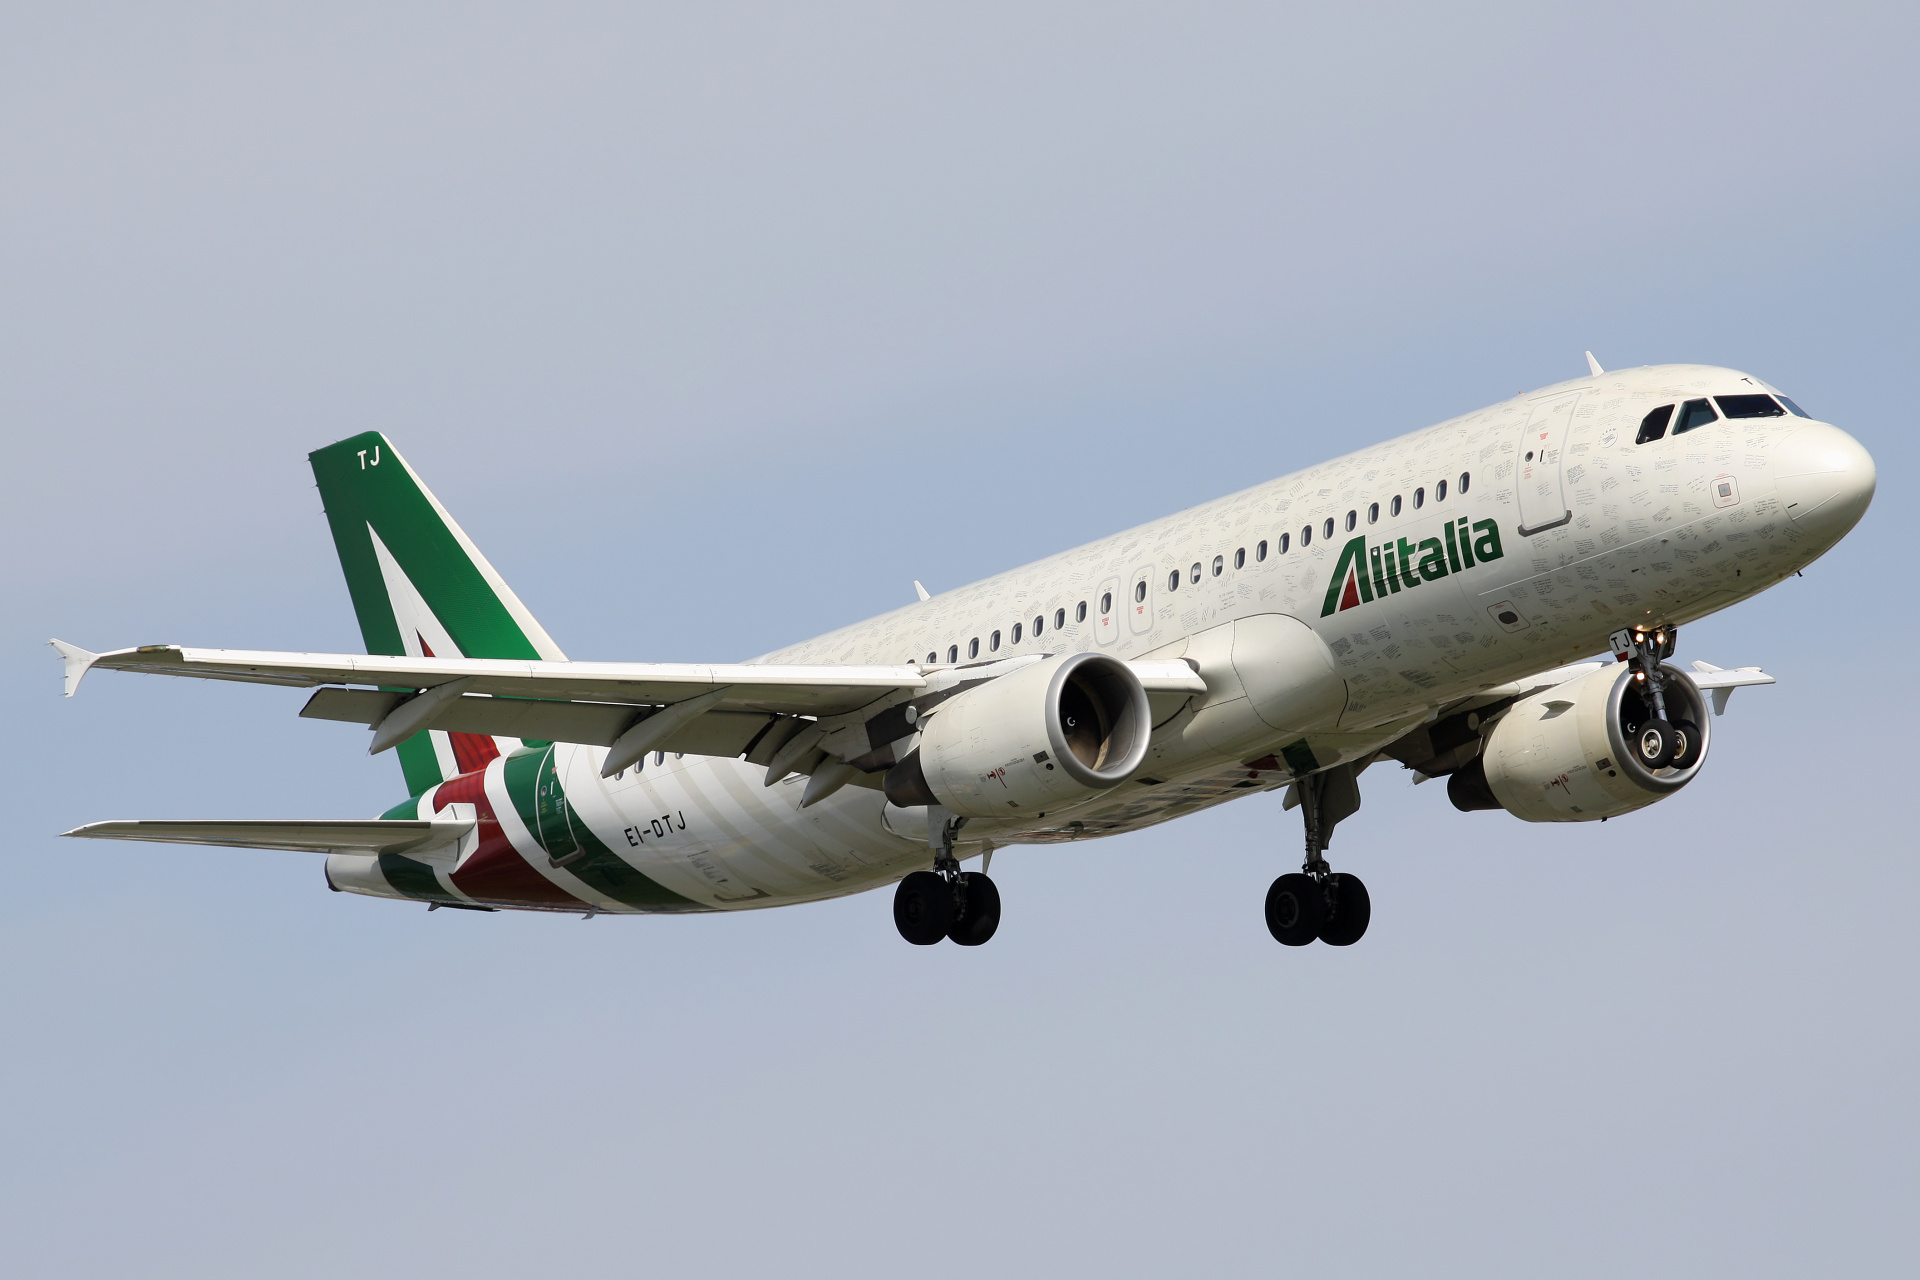 EI-DTJ (Employee Signatures livery) (Aircraft » EPWA Spotting » Airbus A320-200 » Alitalia)